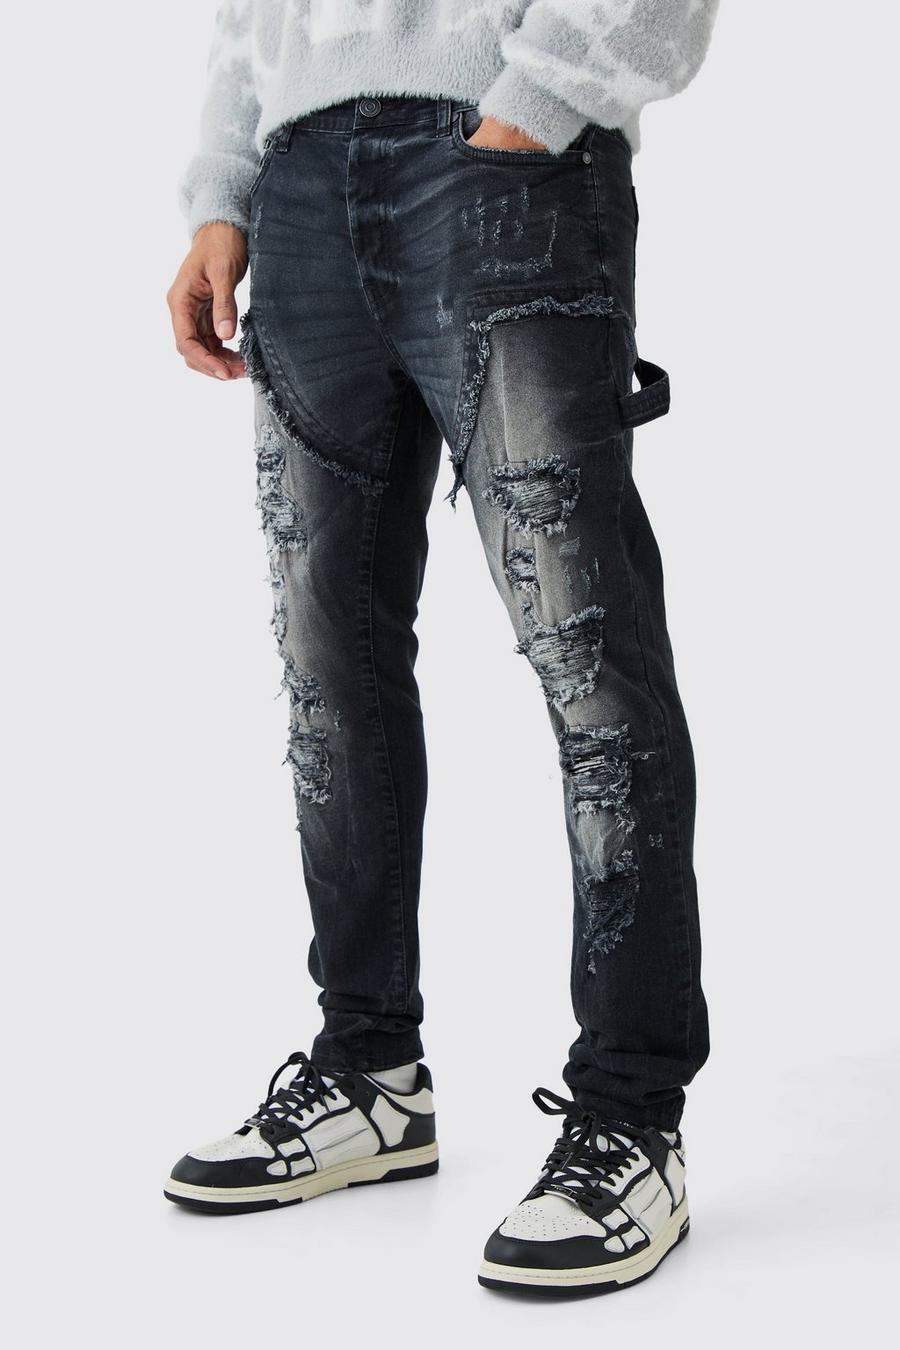 Jeans Skinny Fit in denim Stretch con strappi Carpenter neri slavati, Washed black